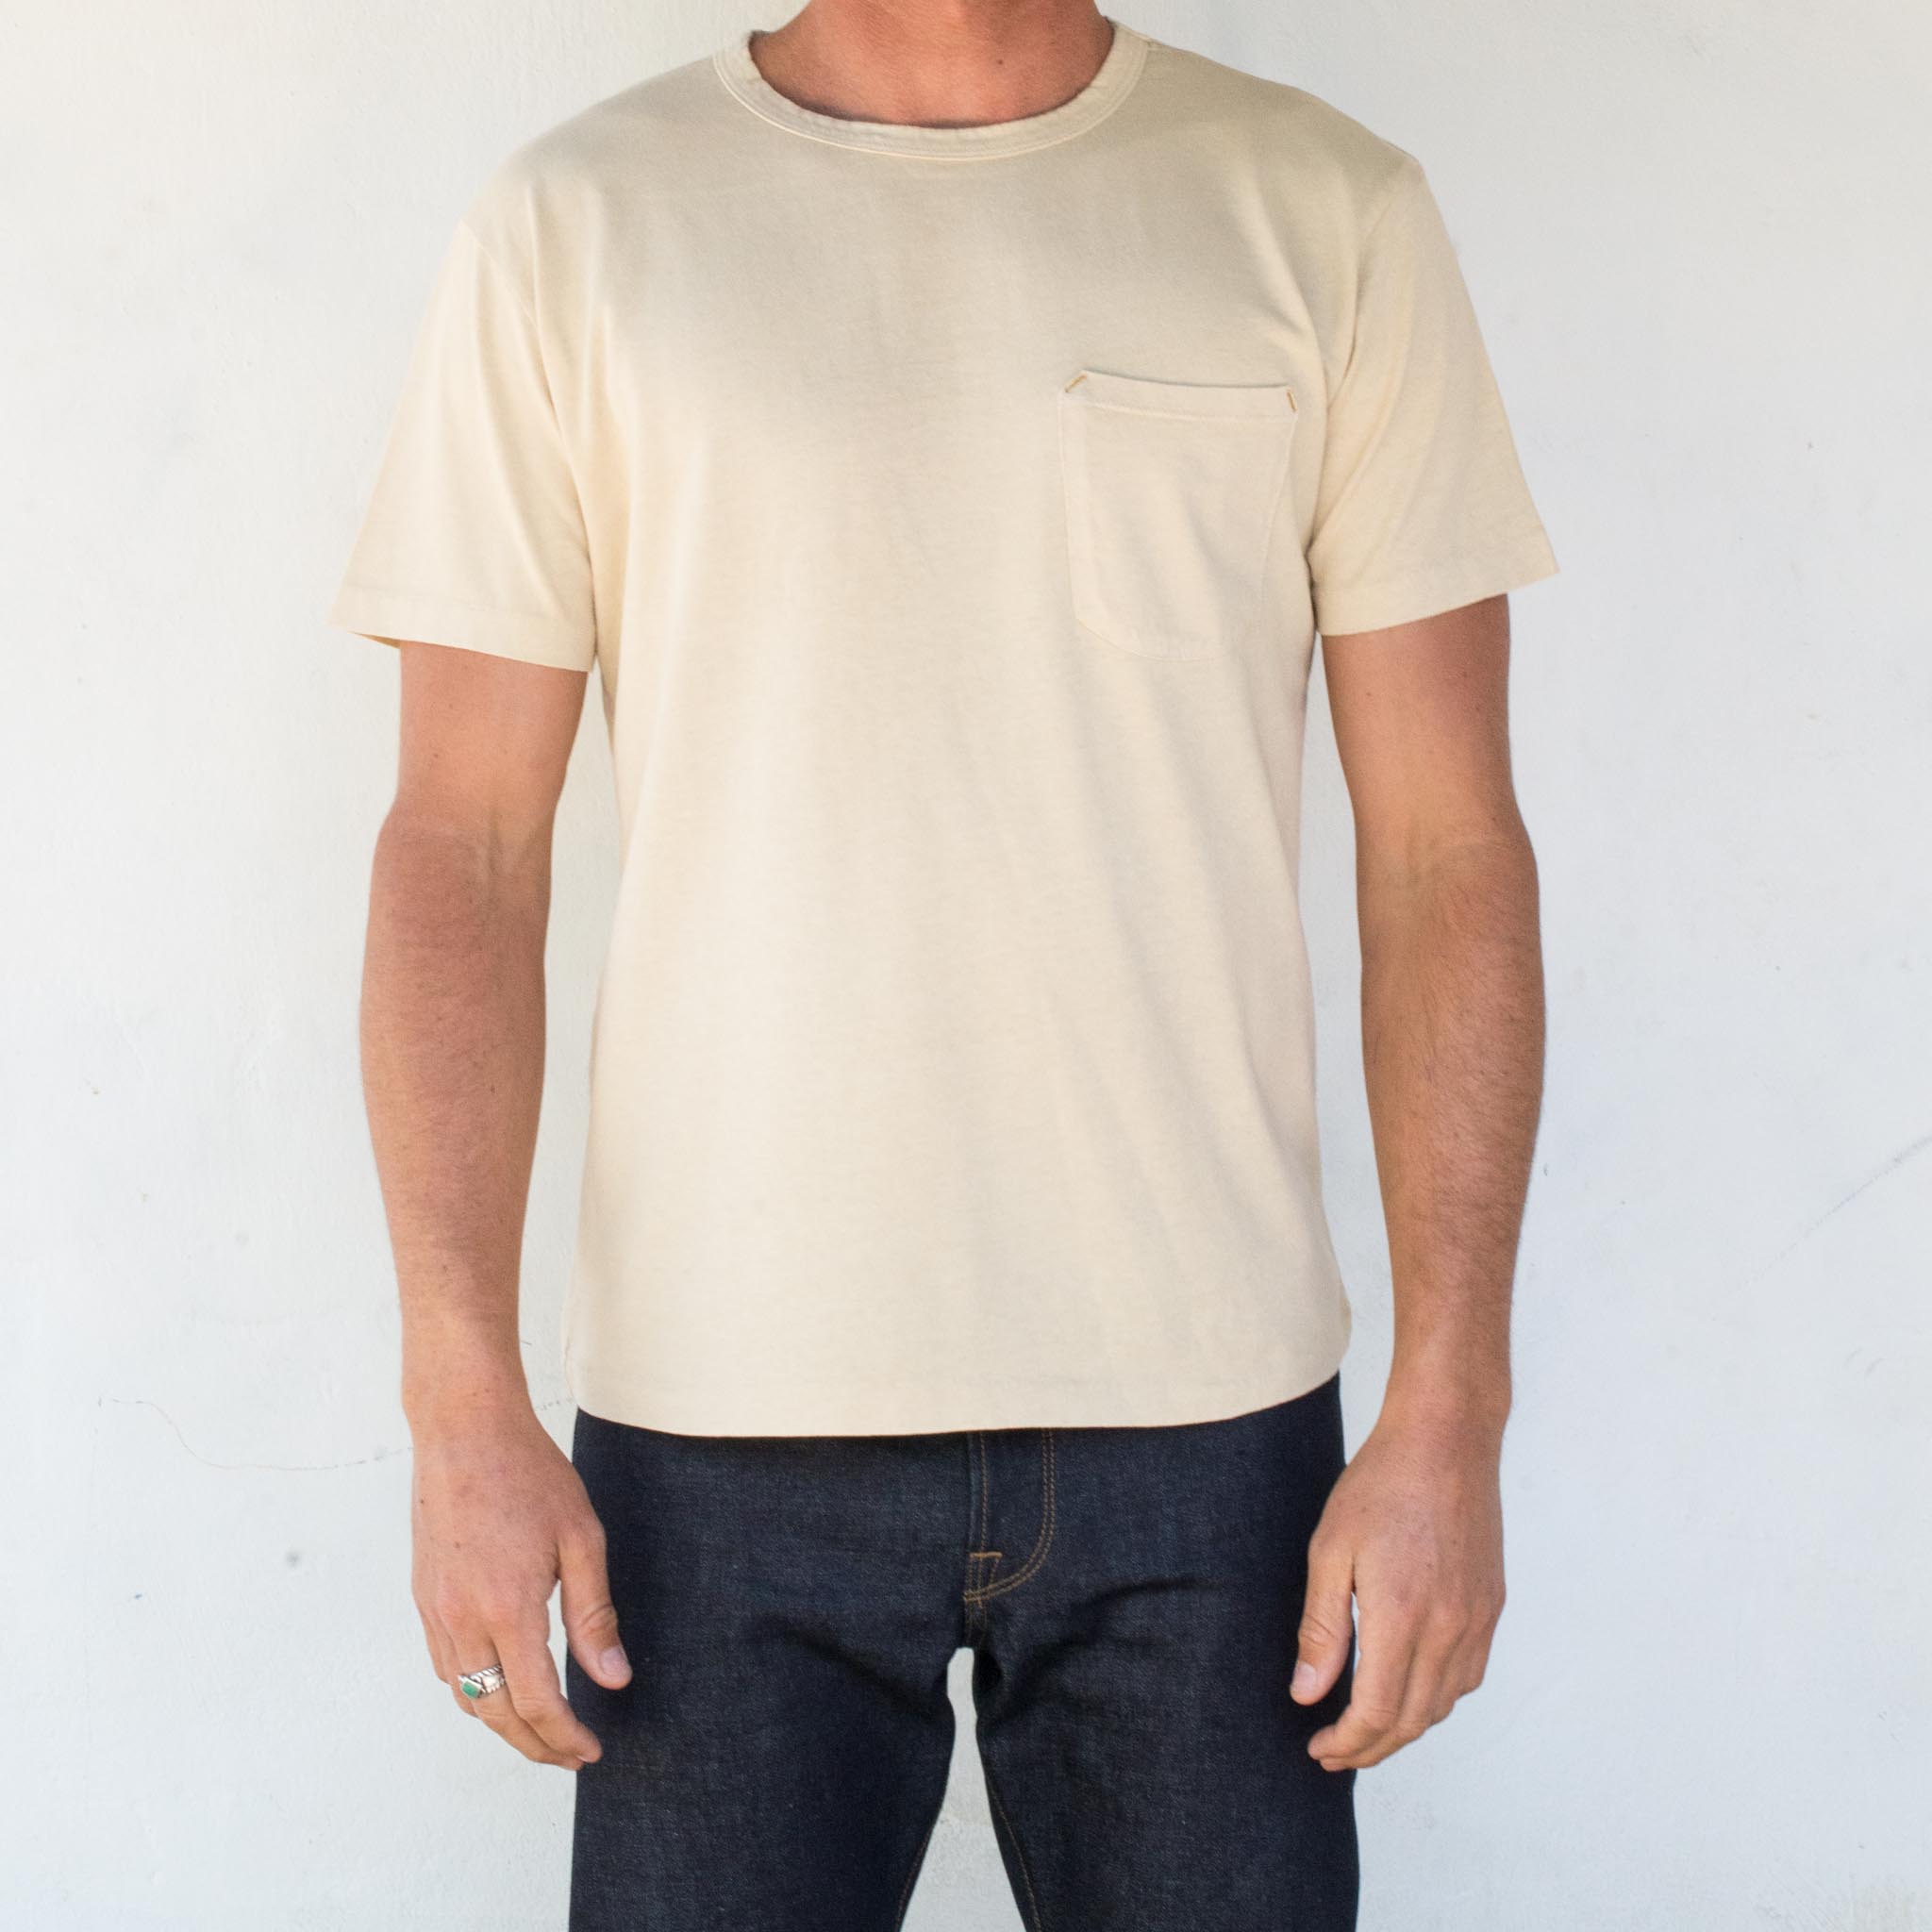 9 oz US Cotton Ring-spun Tubular T-Shirt - White, Tube Tee